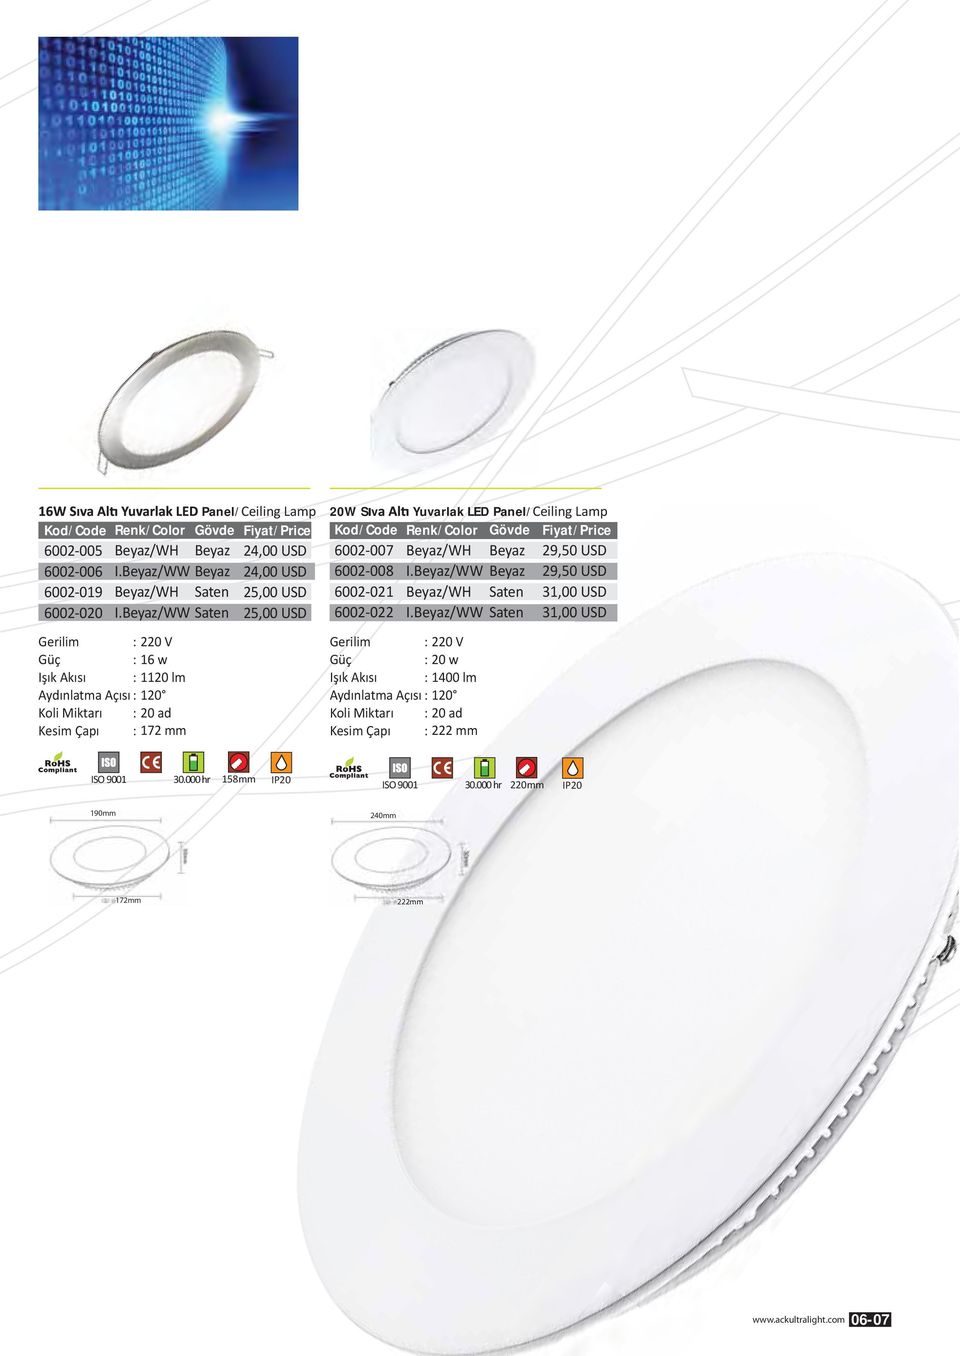 USD 20W Sıv 6002-007 6002-008 6002-021 6002-022 Yuvarlak LED Panel/Ceiling Lamp Gövde Beyaz/WH Beyaz 29,50 USD I.